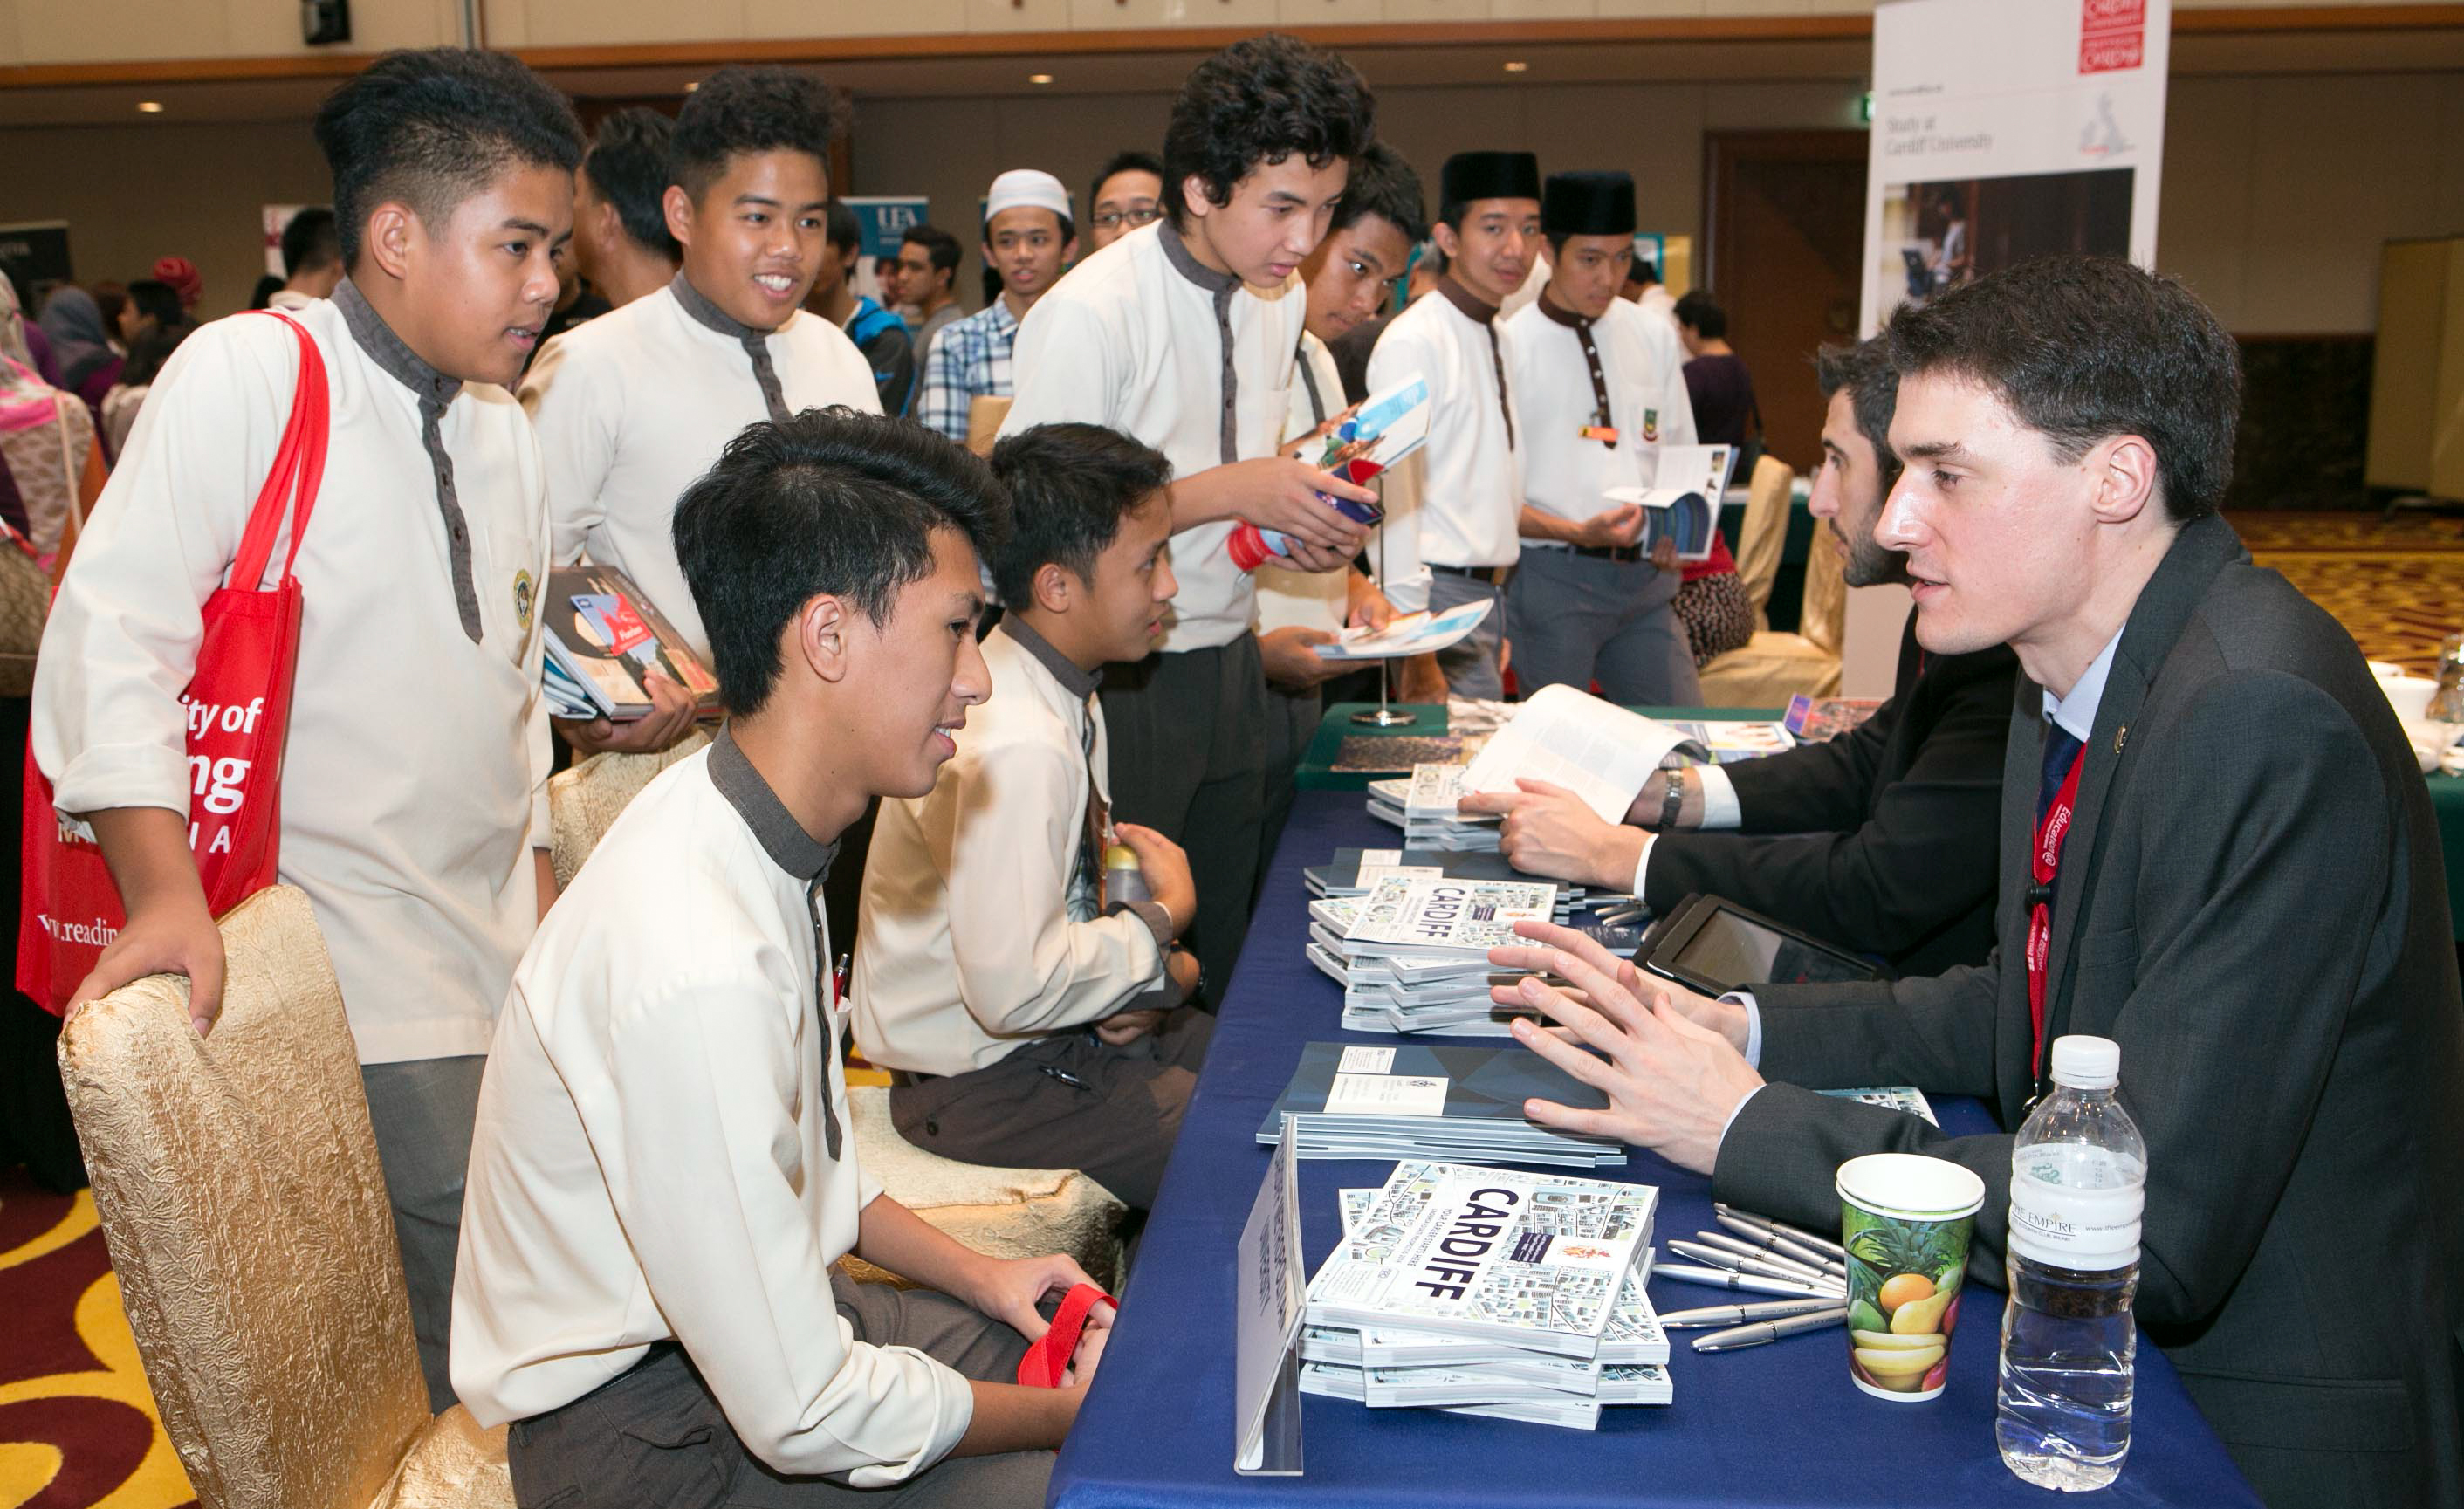 Education UK Exhibition Brunei 2014 Report